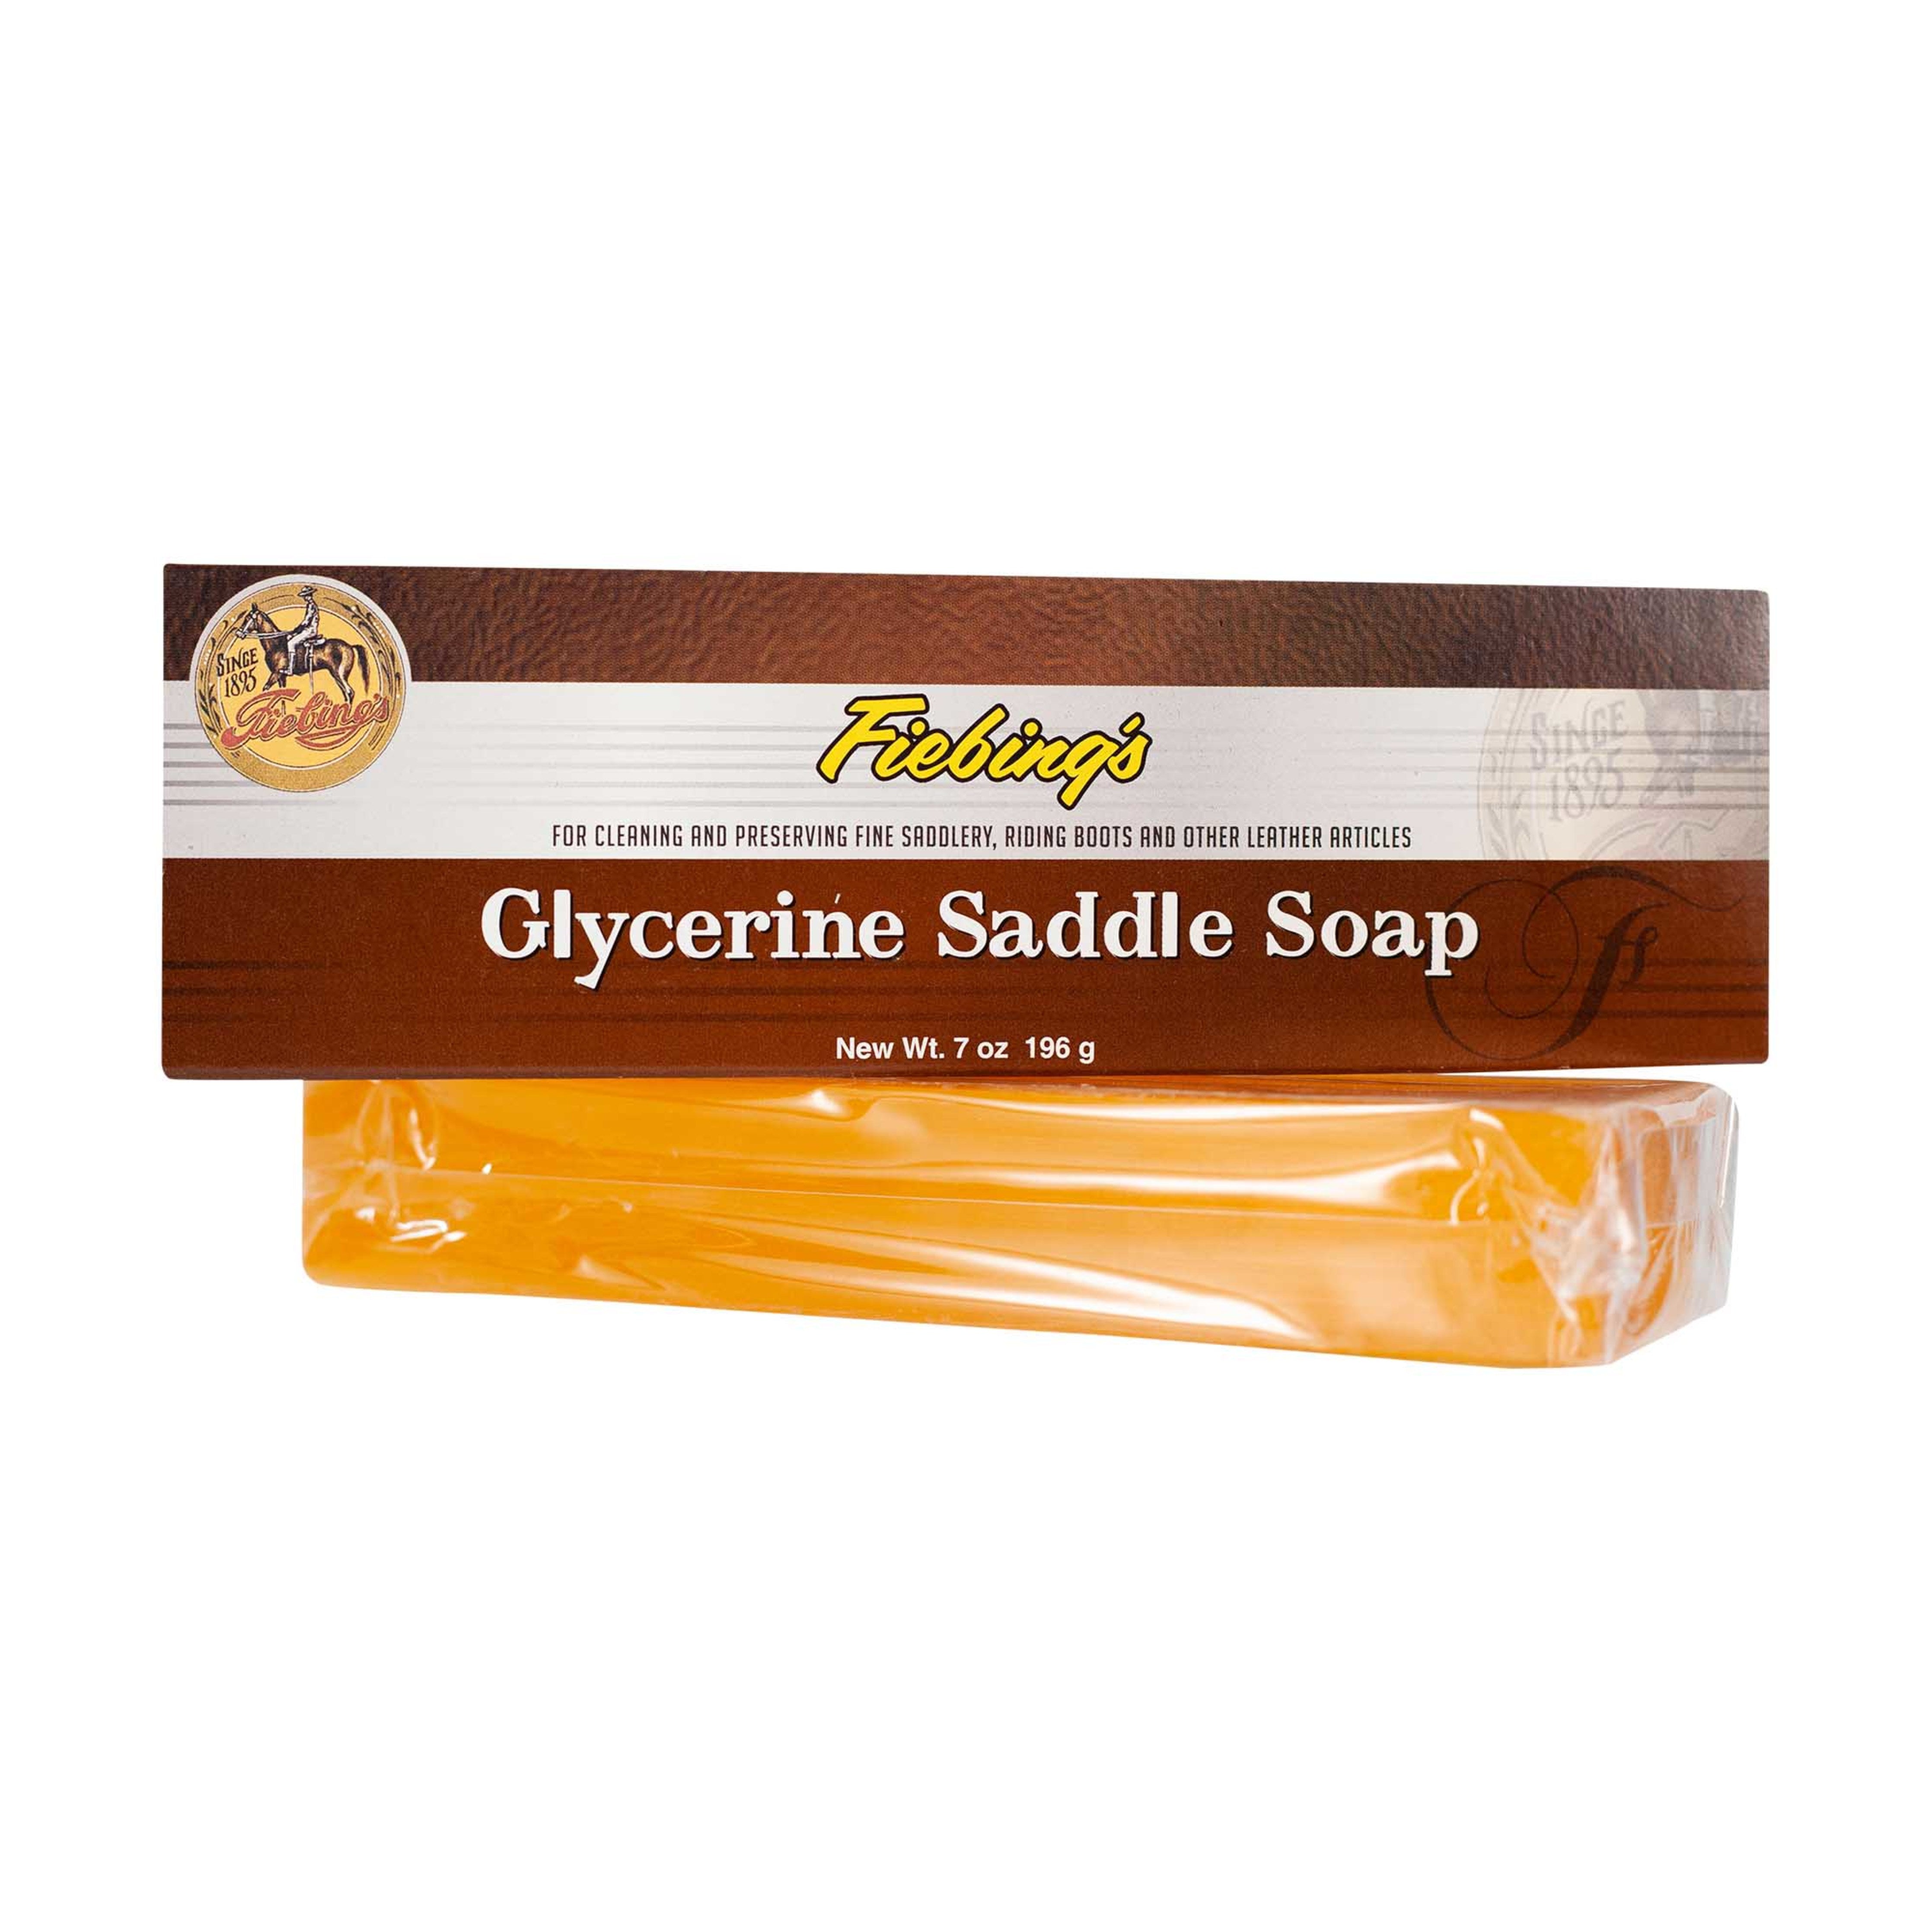 Fiebings Glycerine Saddle Soap Bar 7 oz